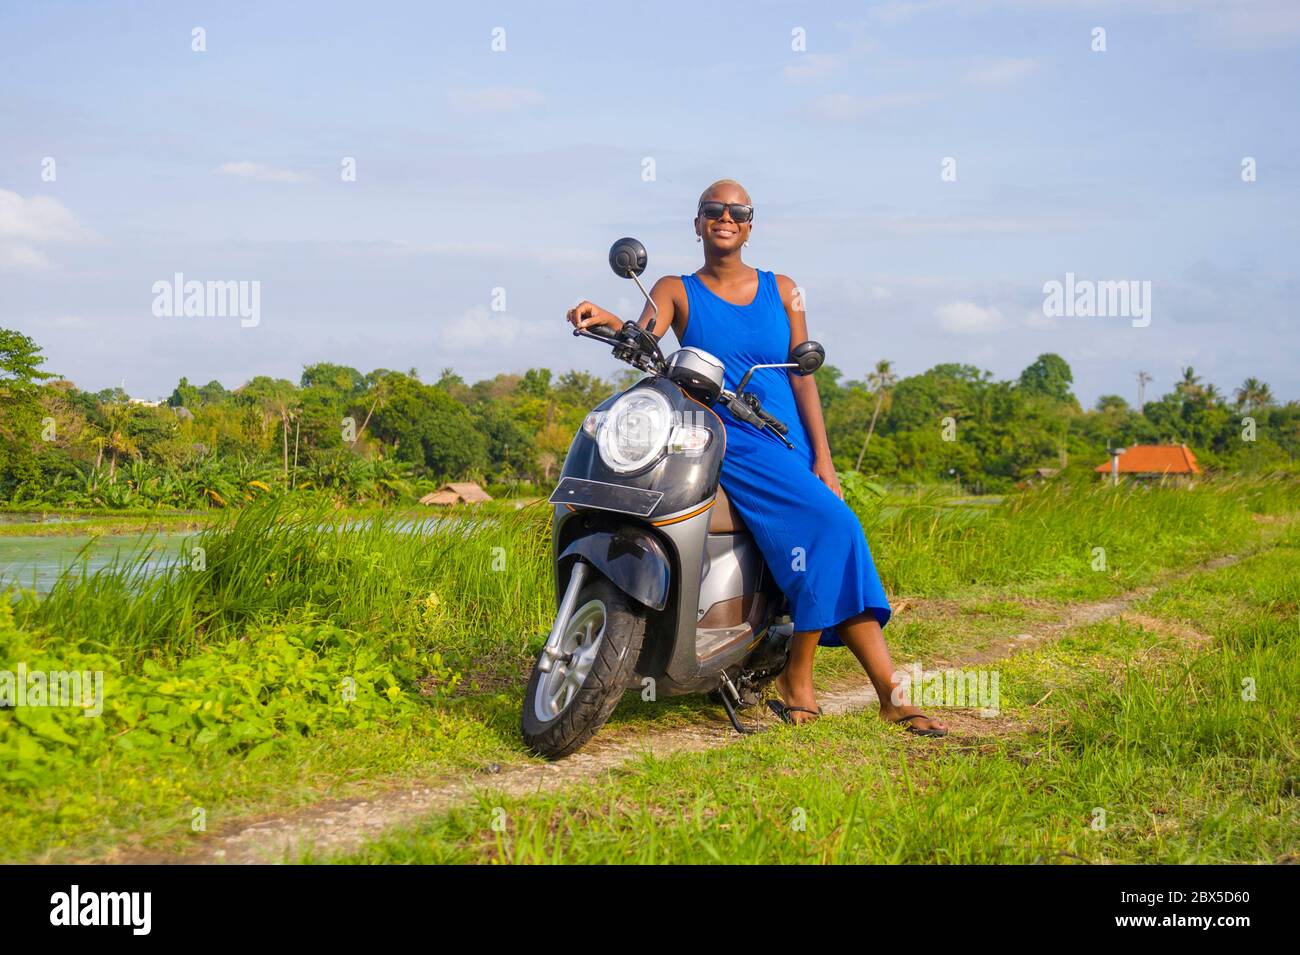 Woman In Helmet Posing On Scooter